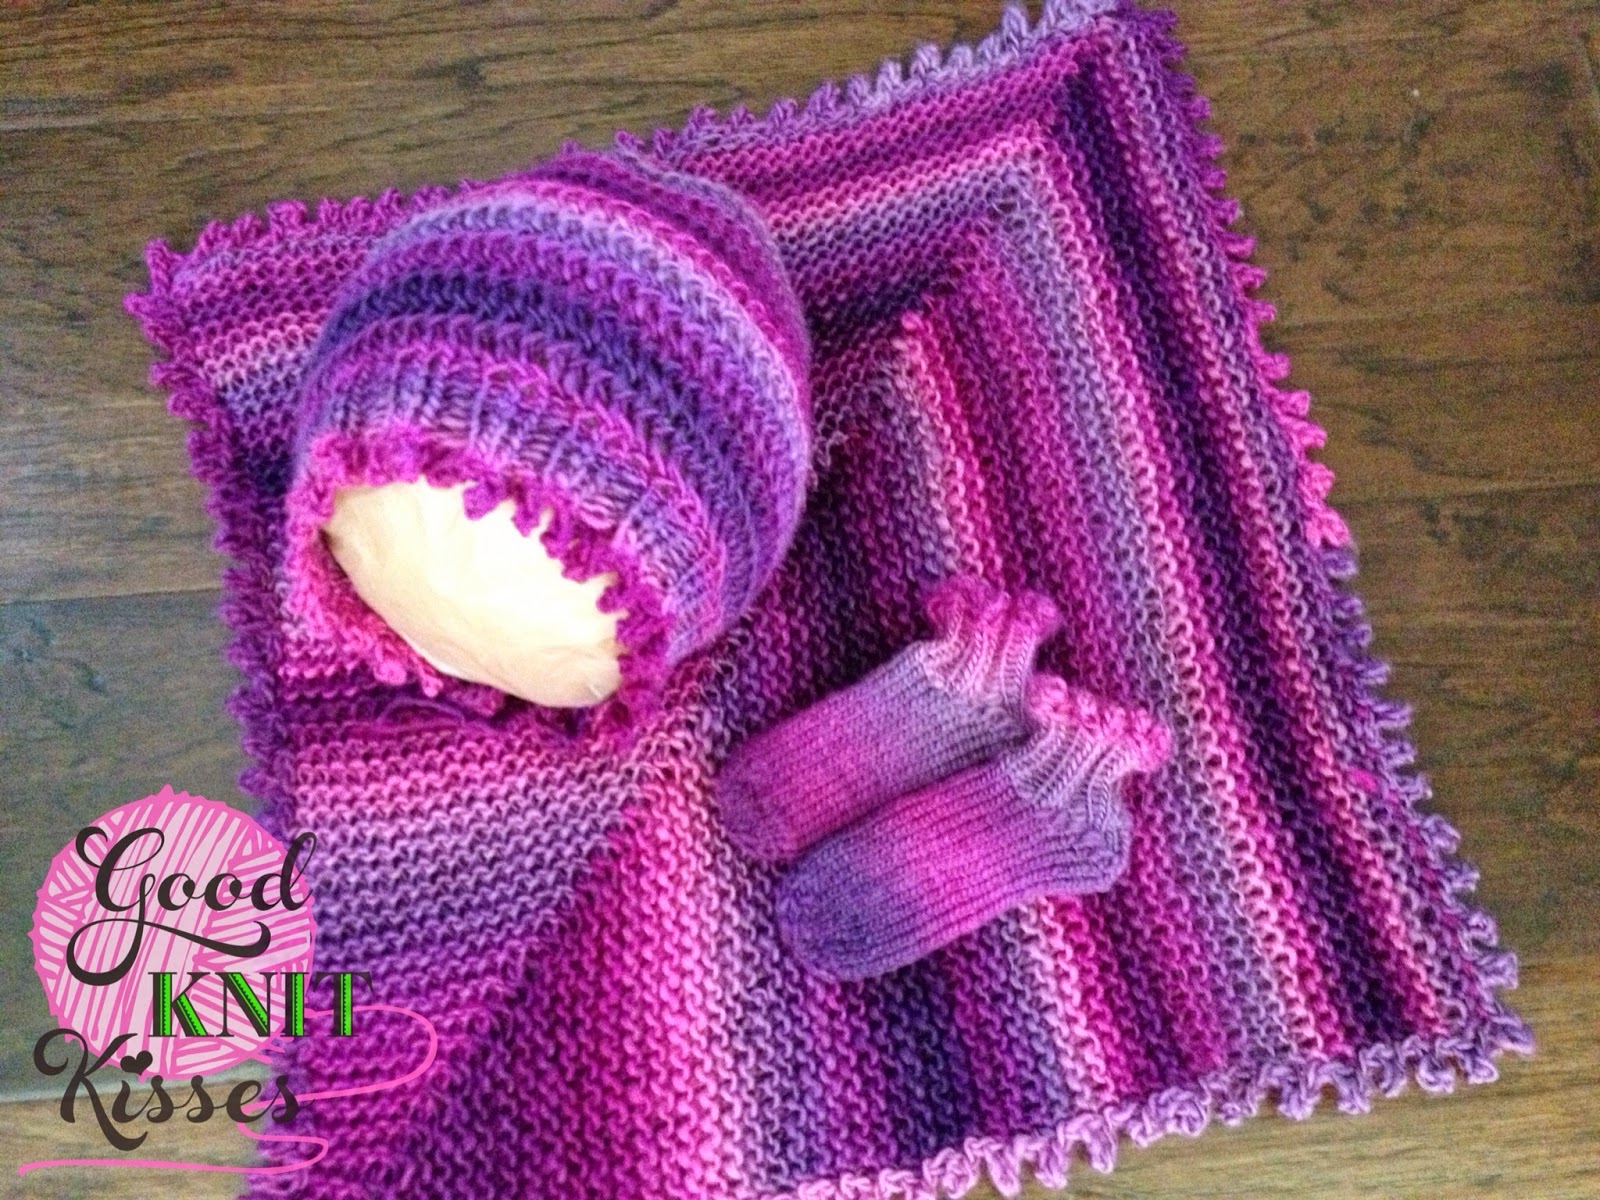 GoodKnit Kisses: Picot Bonnet free loom knit pattern